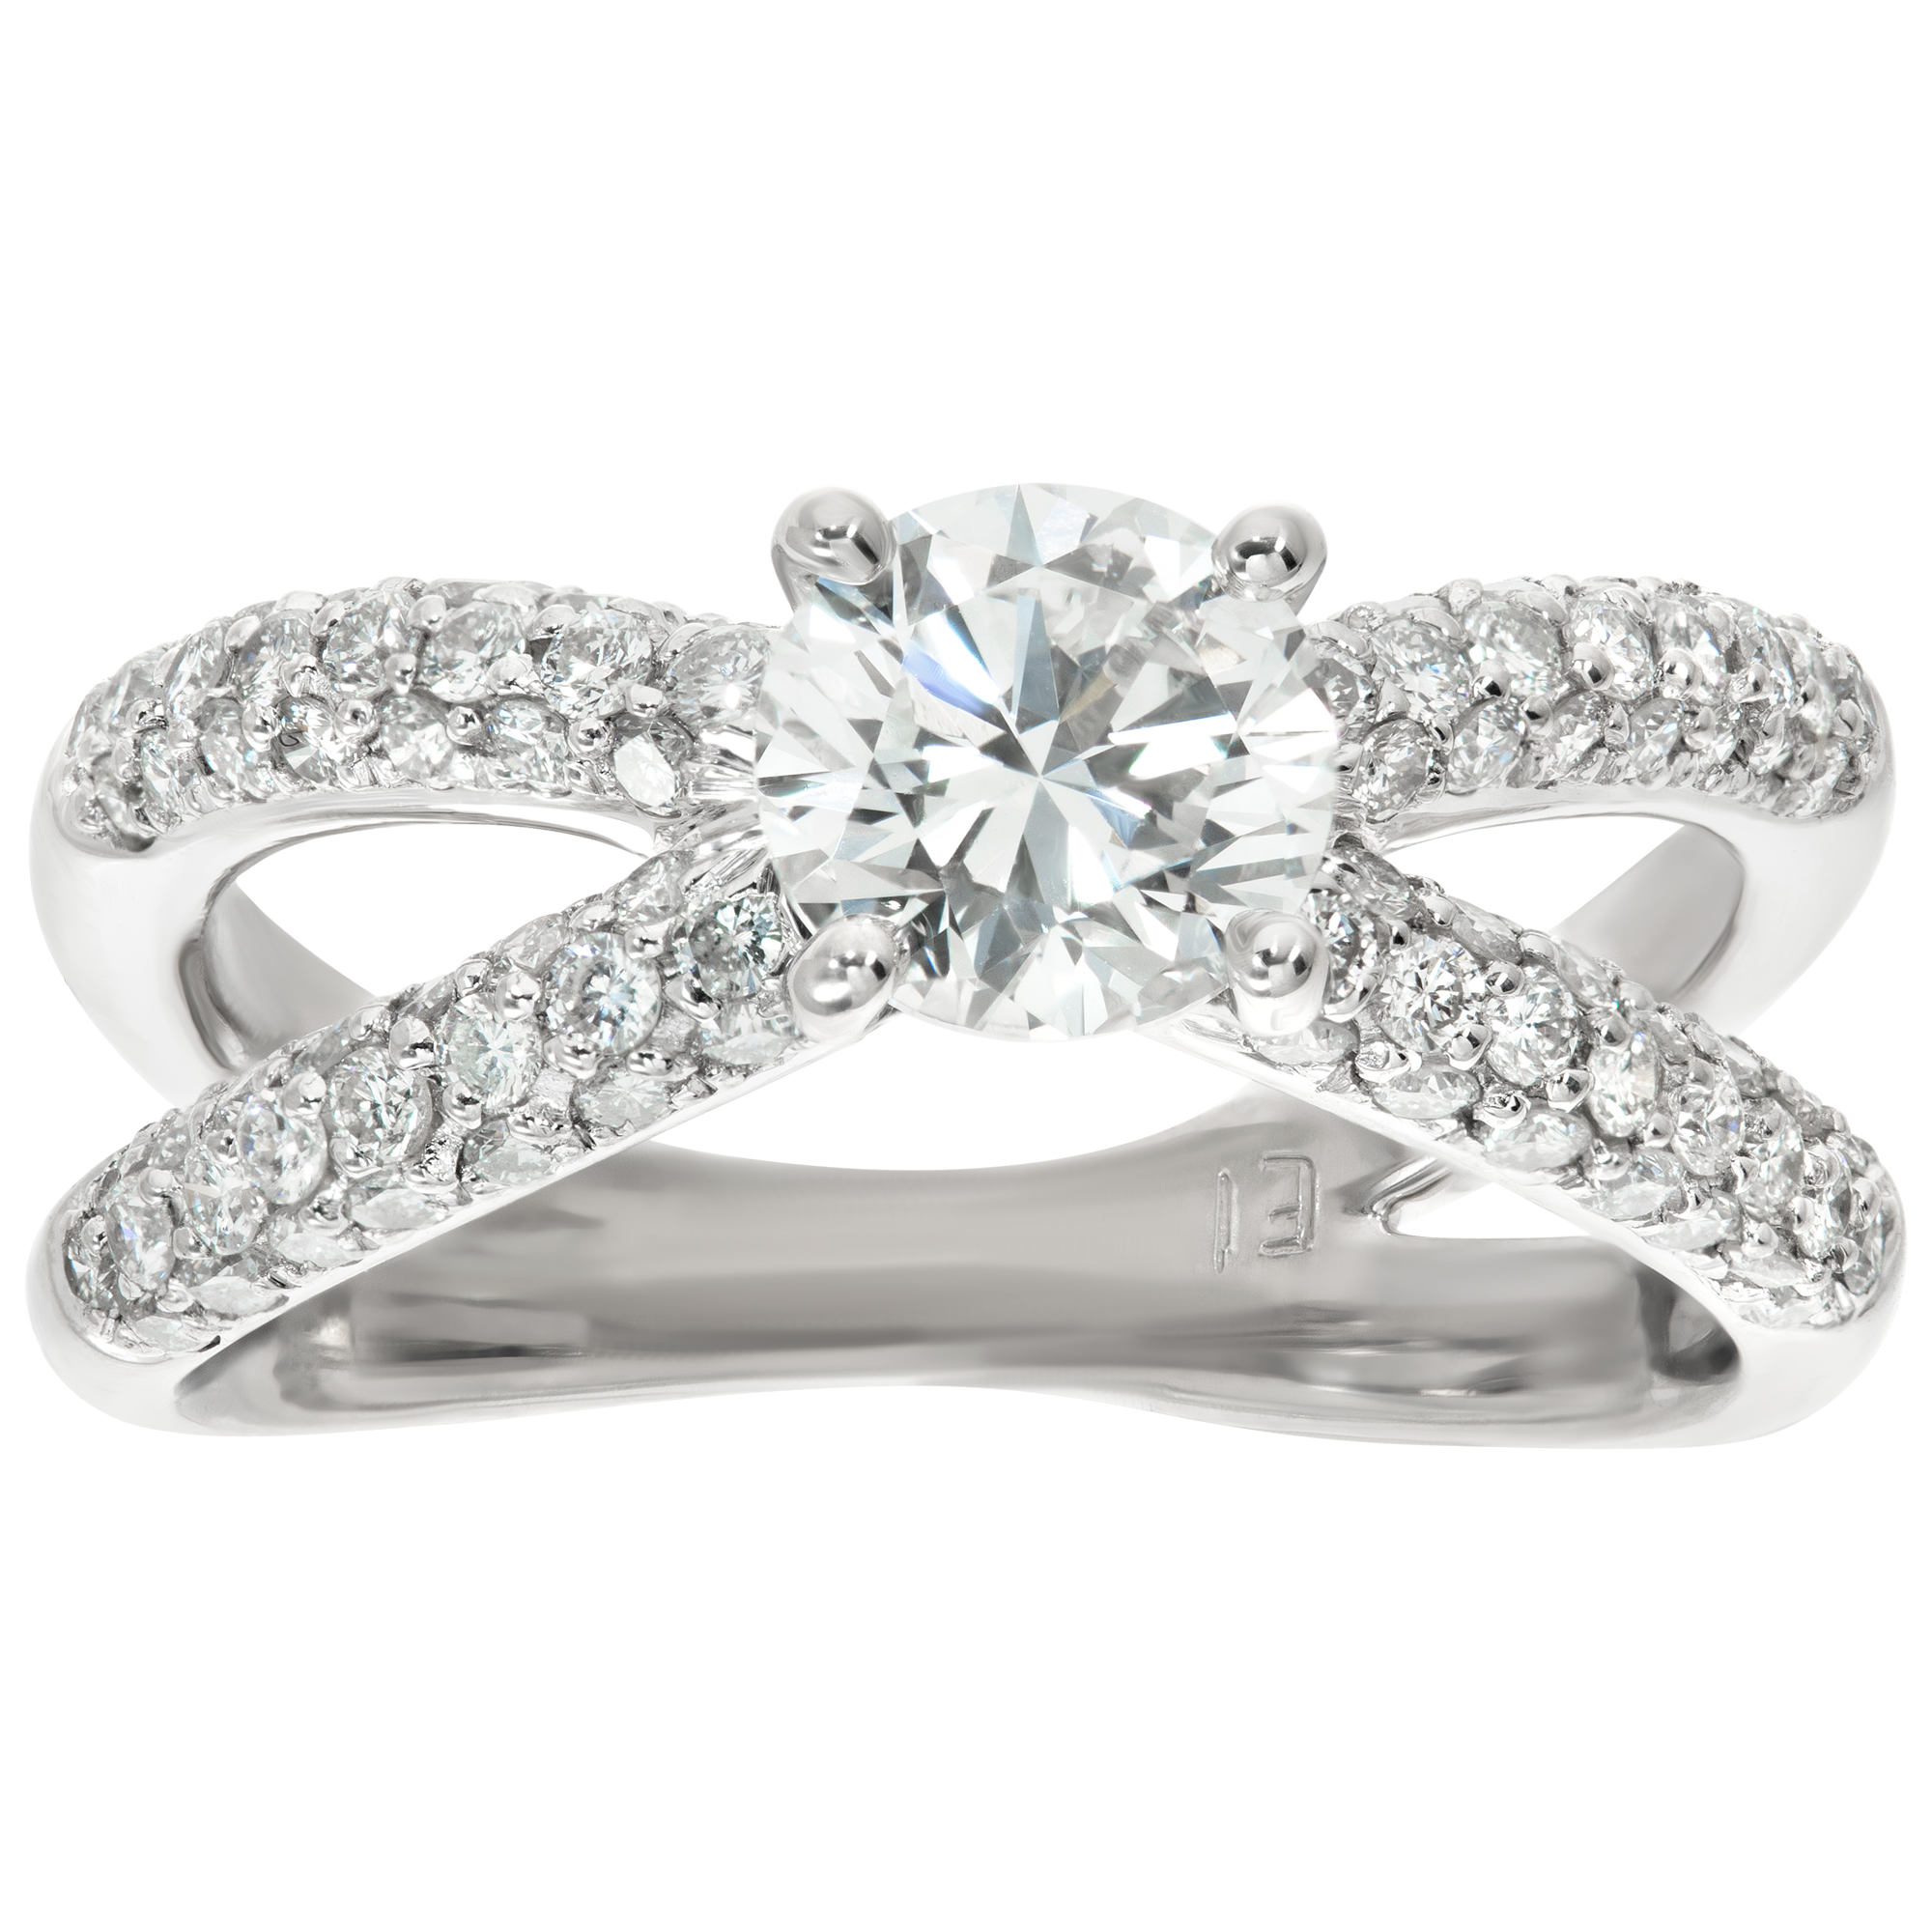 GIA certified round brilliant cut 1.01 carat diamond (E color, VVS2 clarity) ring